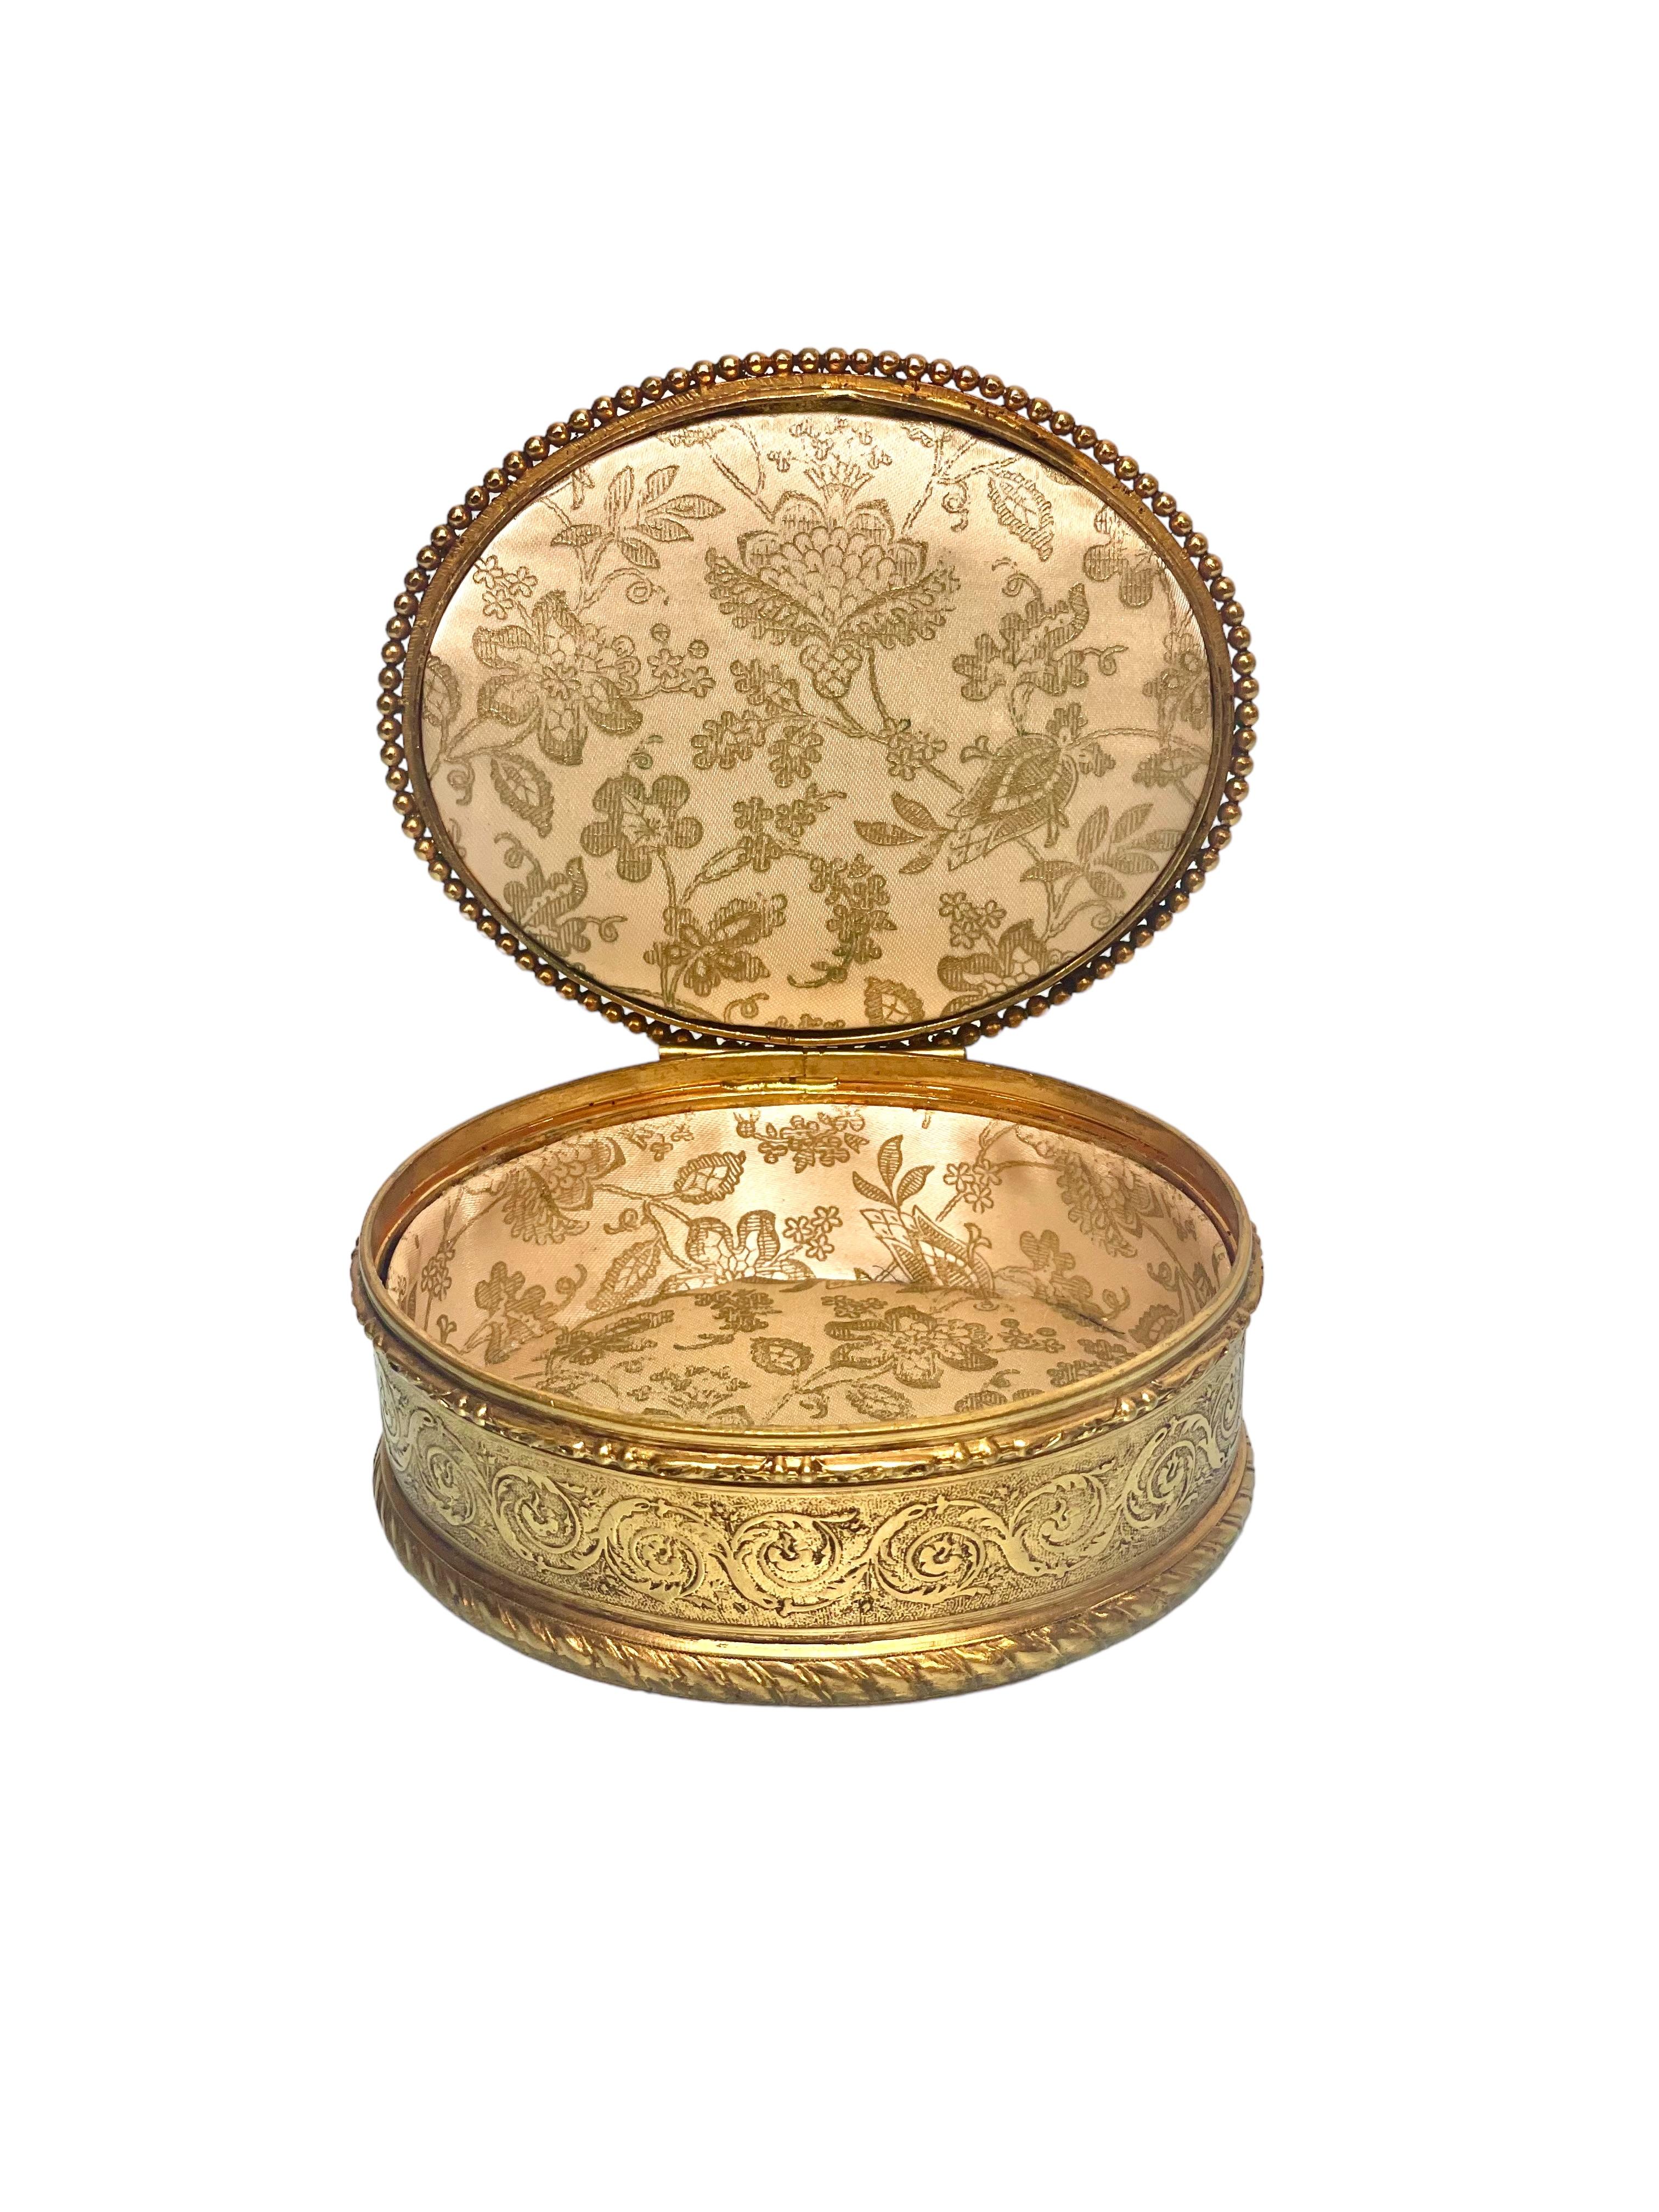 19th Century Louis XVI-Style Gilt Bronze Jewellery Box For Sale